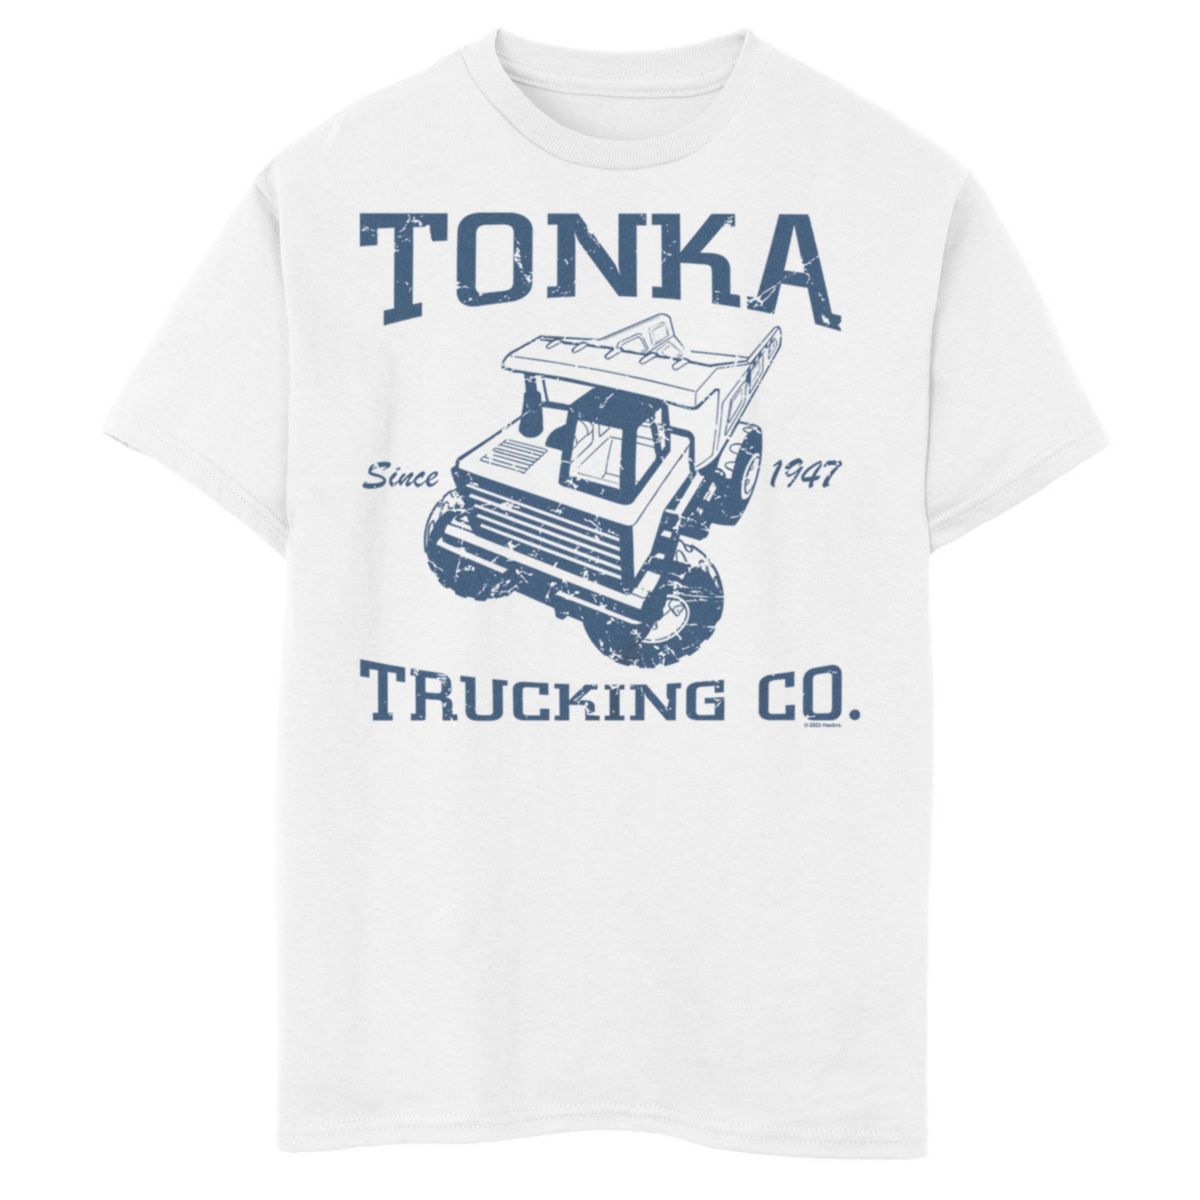 Джерси Hasbro Для мальчиков Tonka Trucking Co. Since 1947 HASBRO